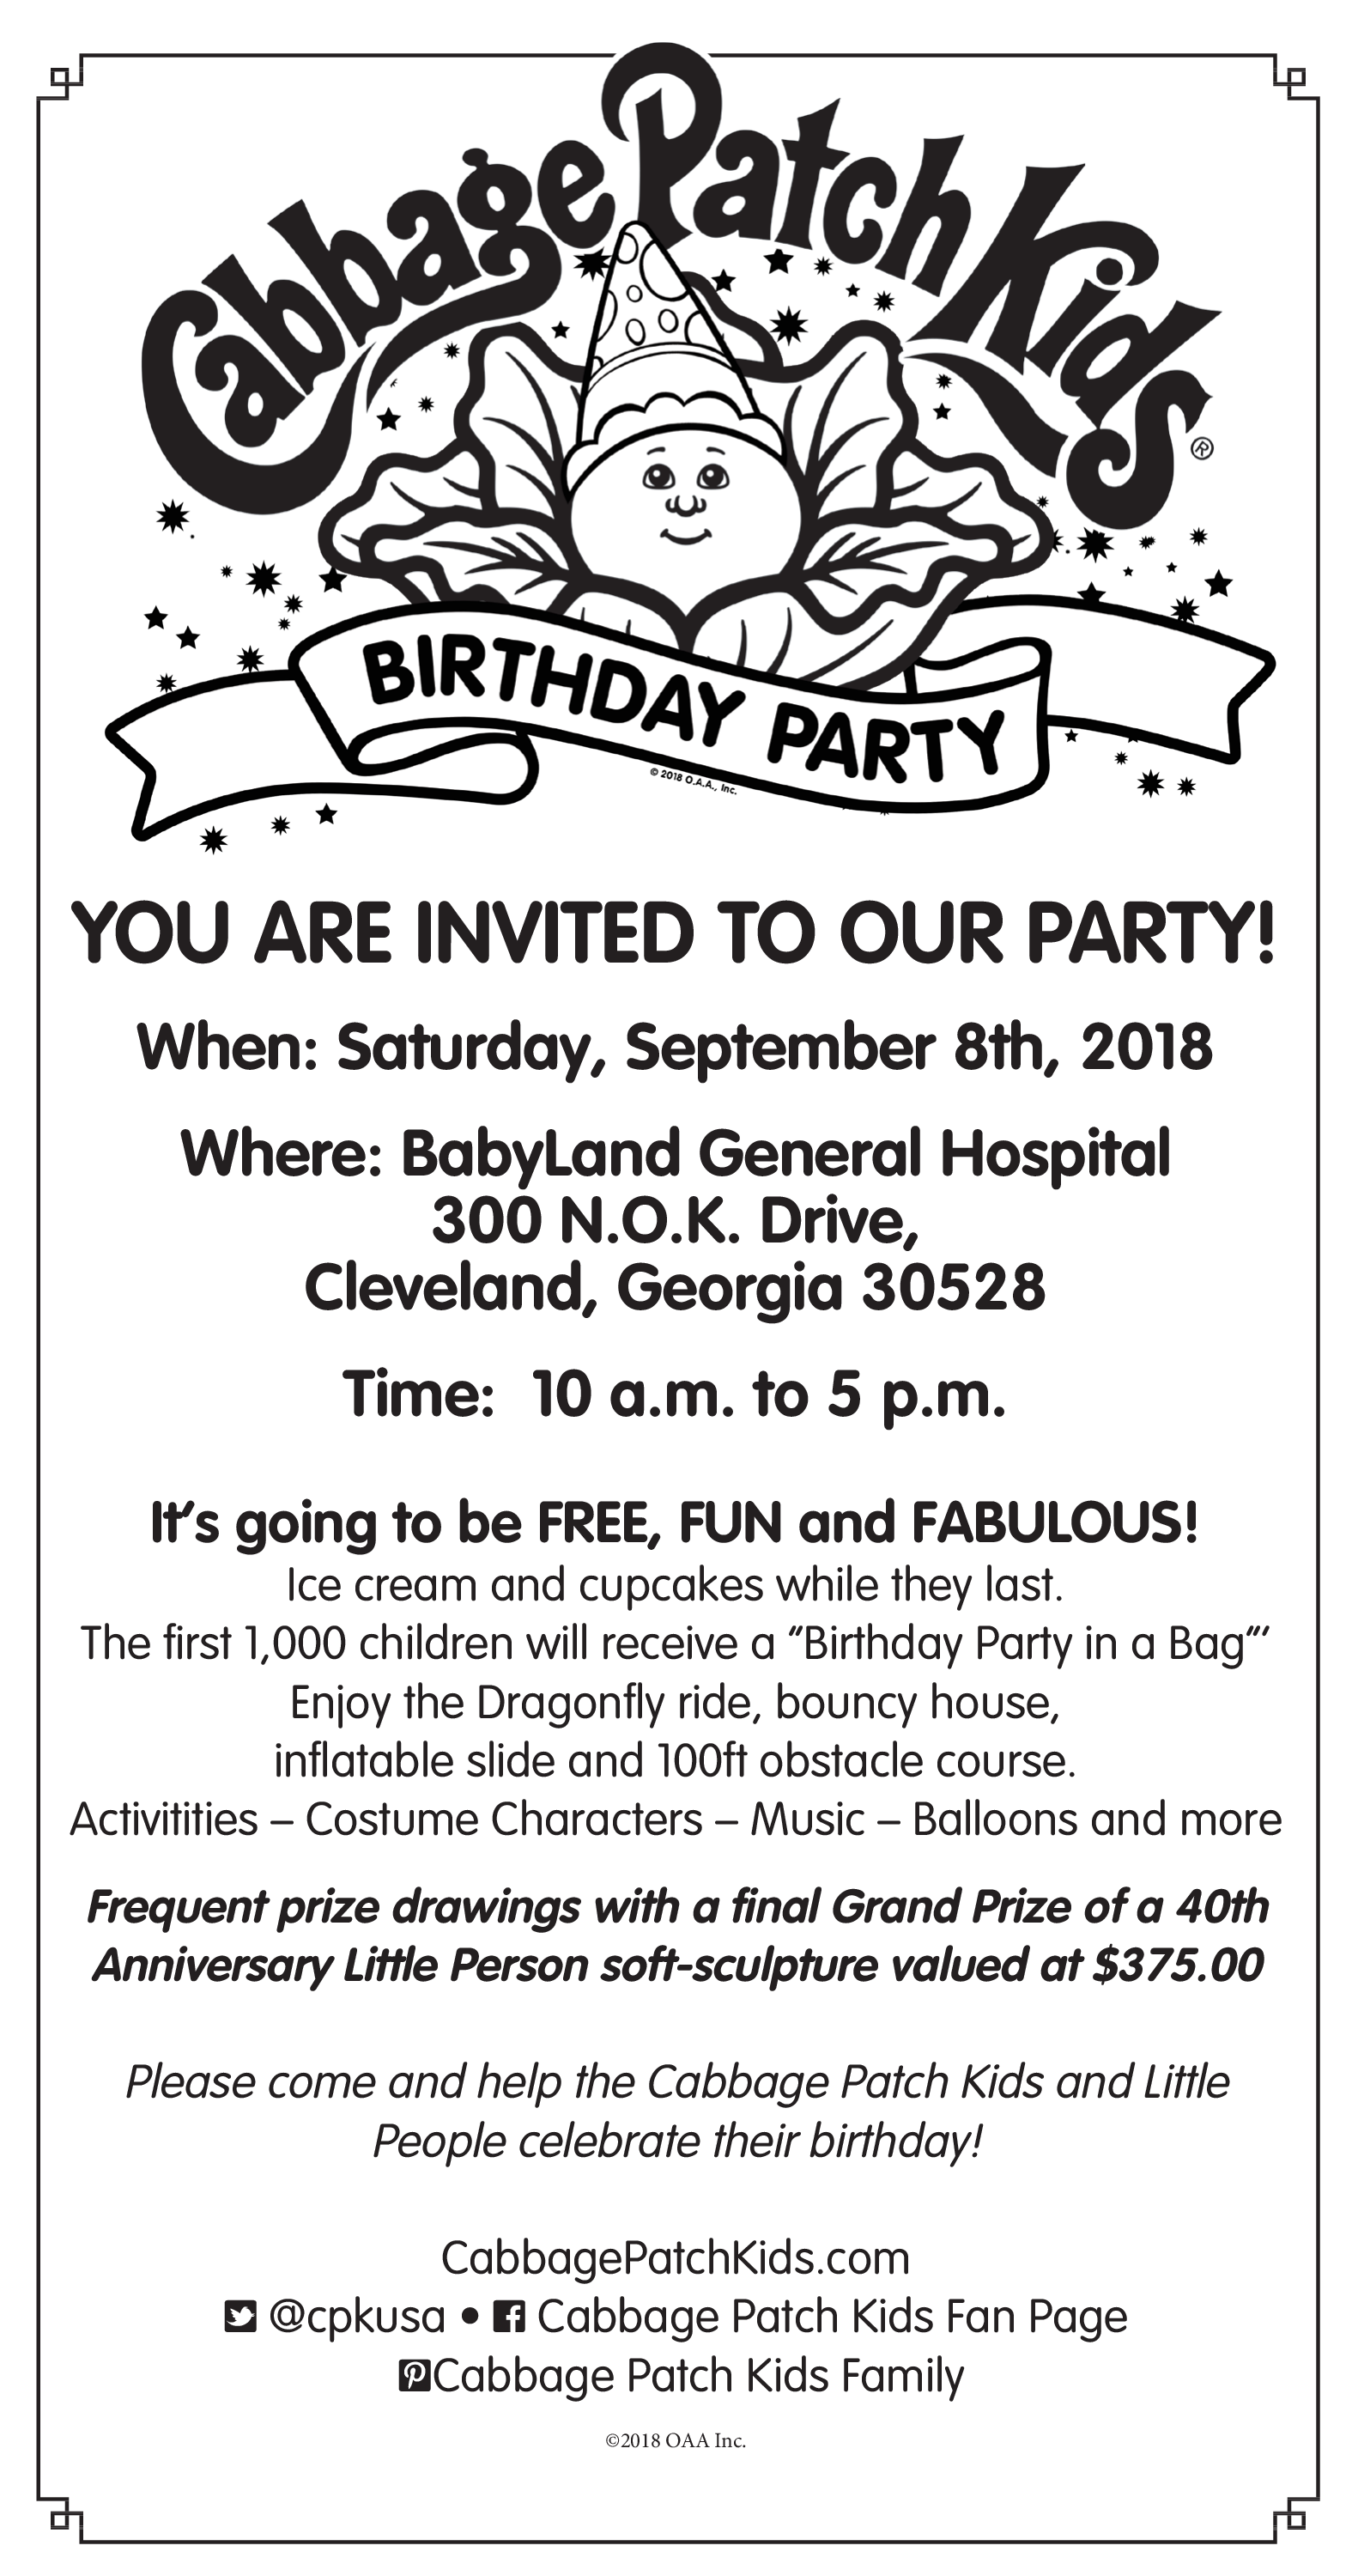 babyland general birthday party